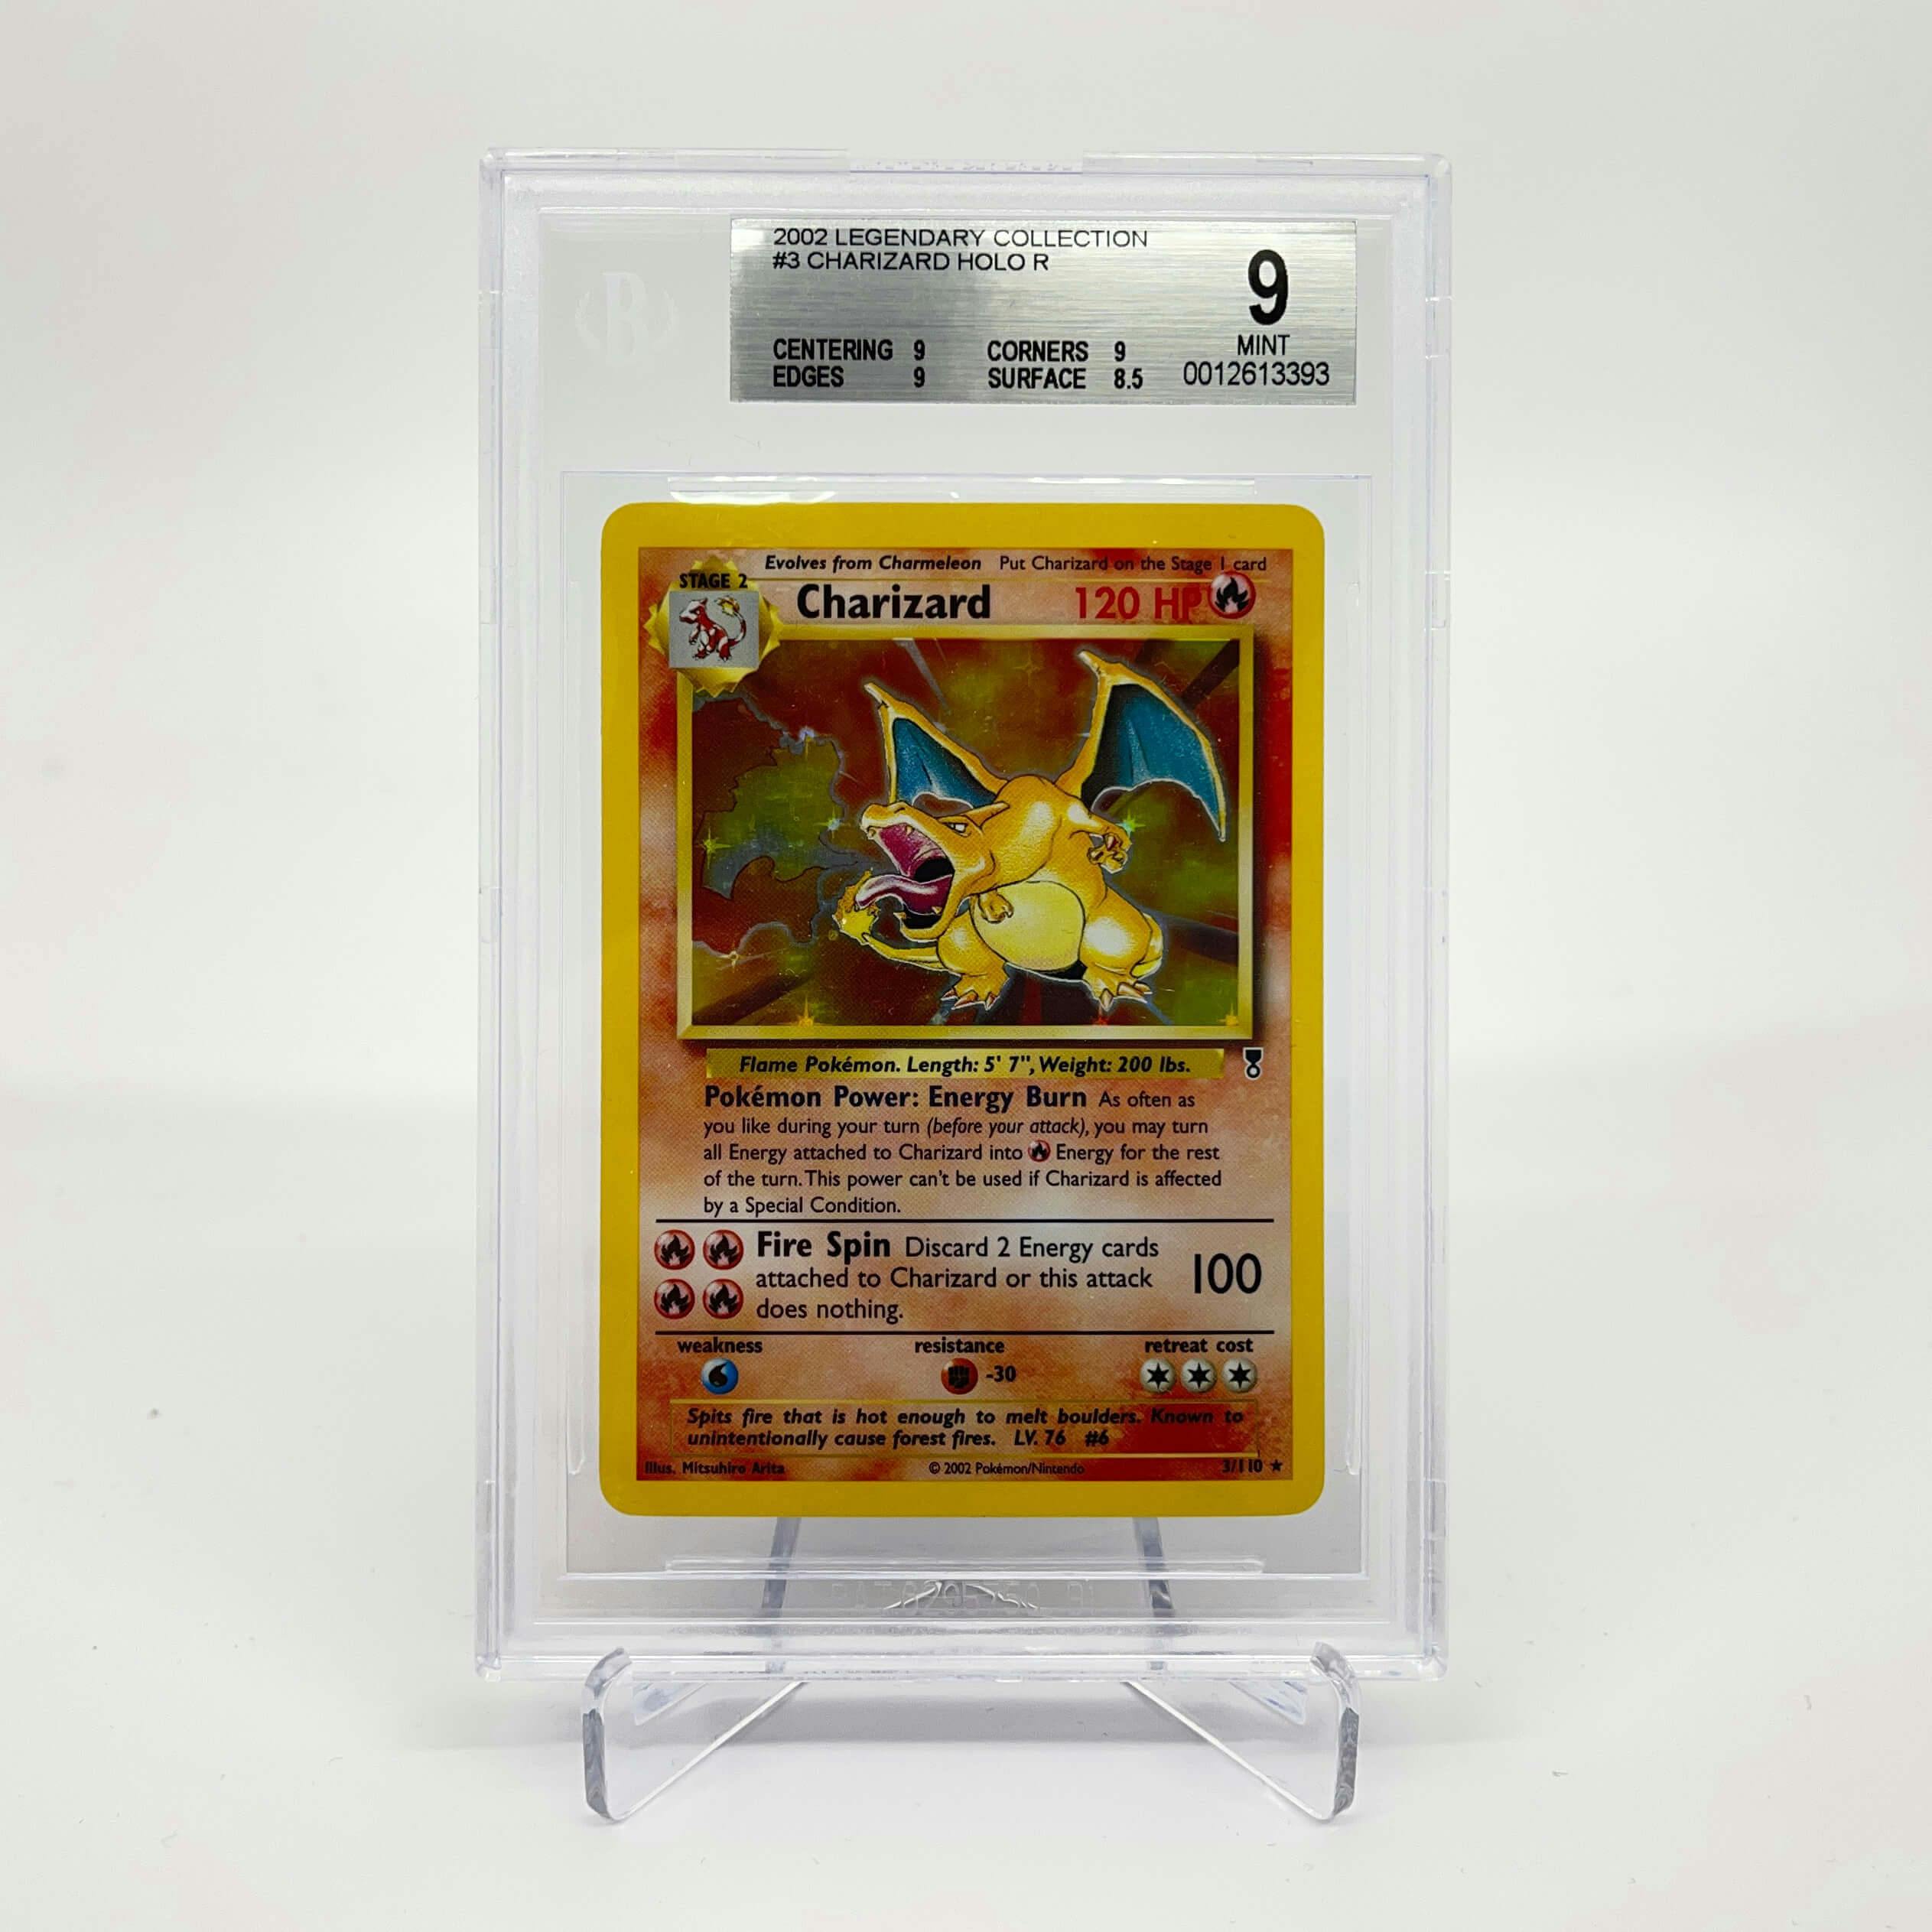 Pokémon Charizard Legendary Collection #3 Holo BGS 9 MINT 